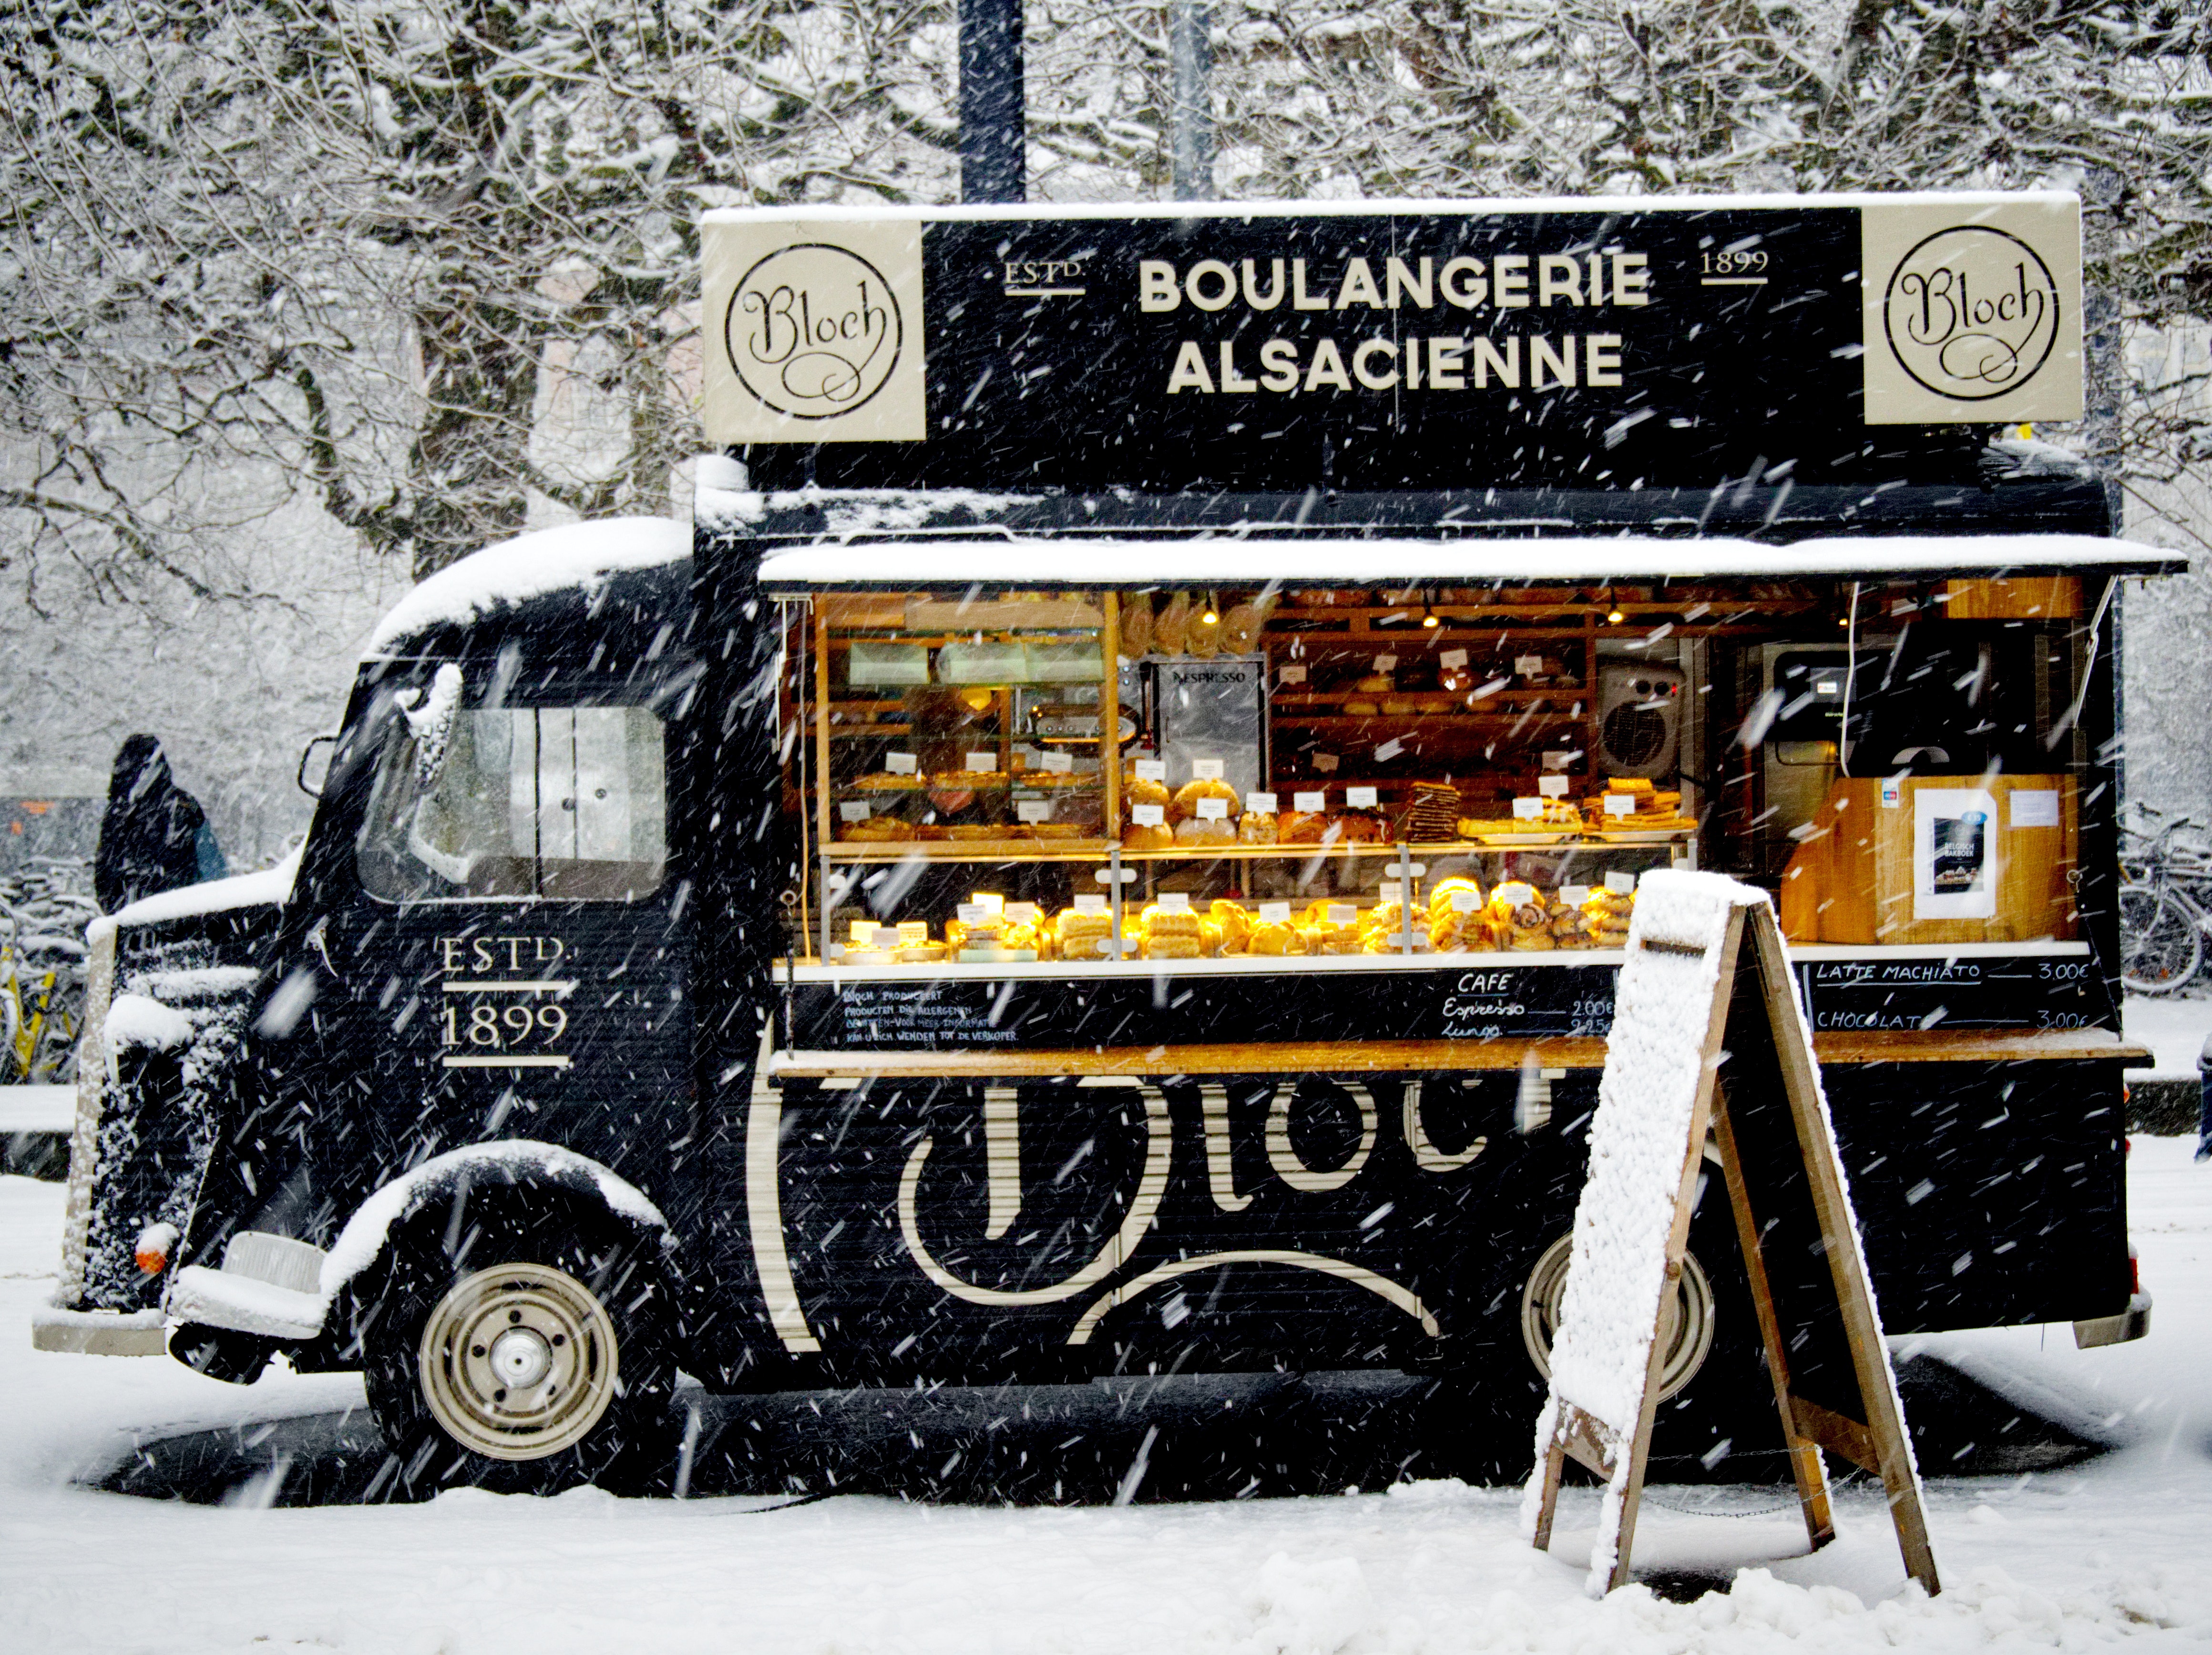 Black boulangerie alsacience food truck photo